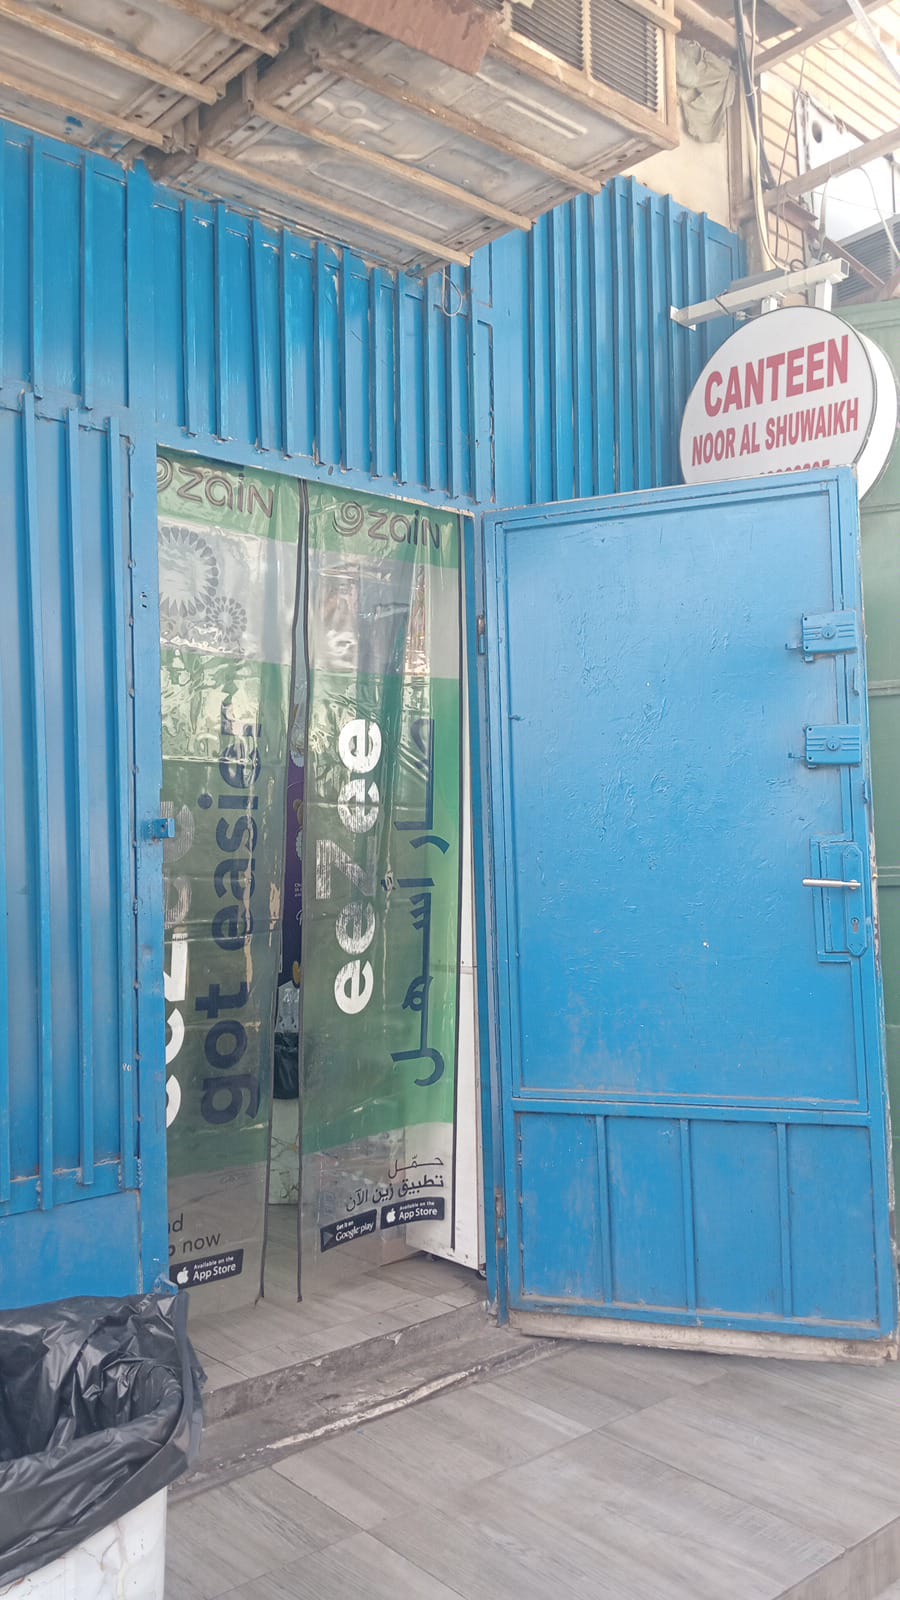 Canteen plus Bakkala for Sale in Shuwaikh industrial area ( 3 visa include )